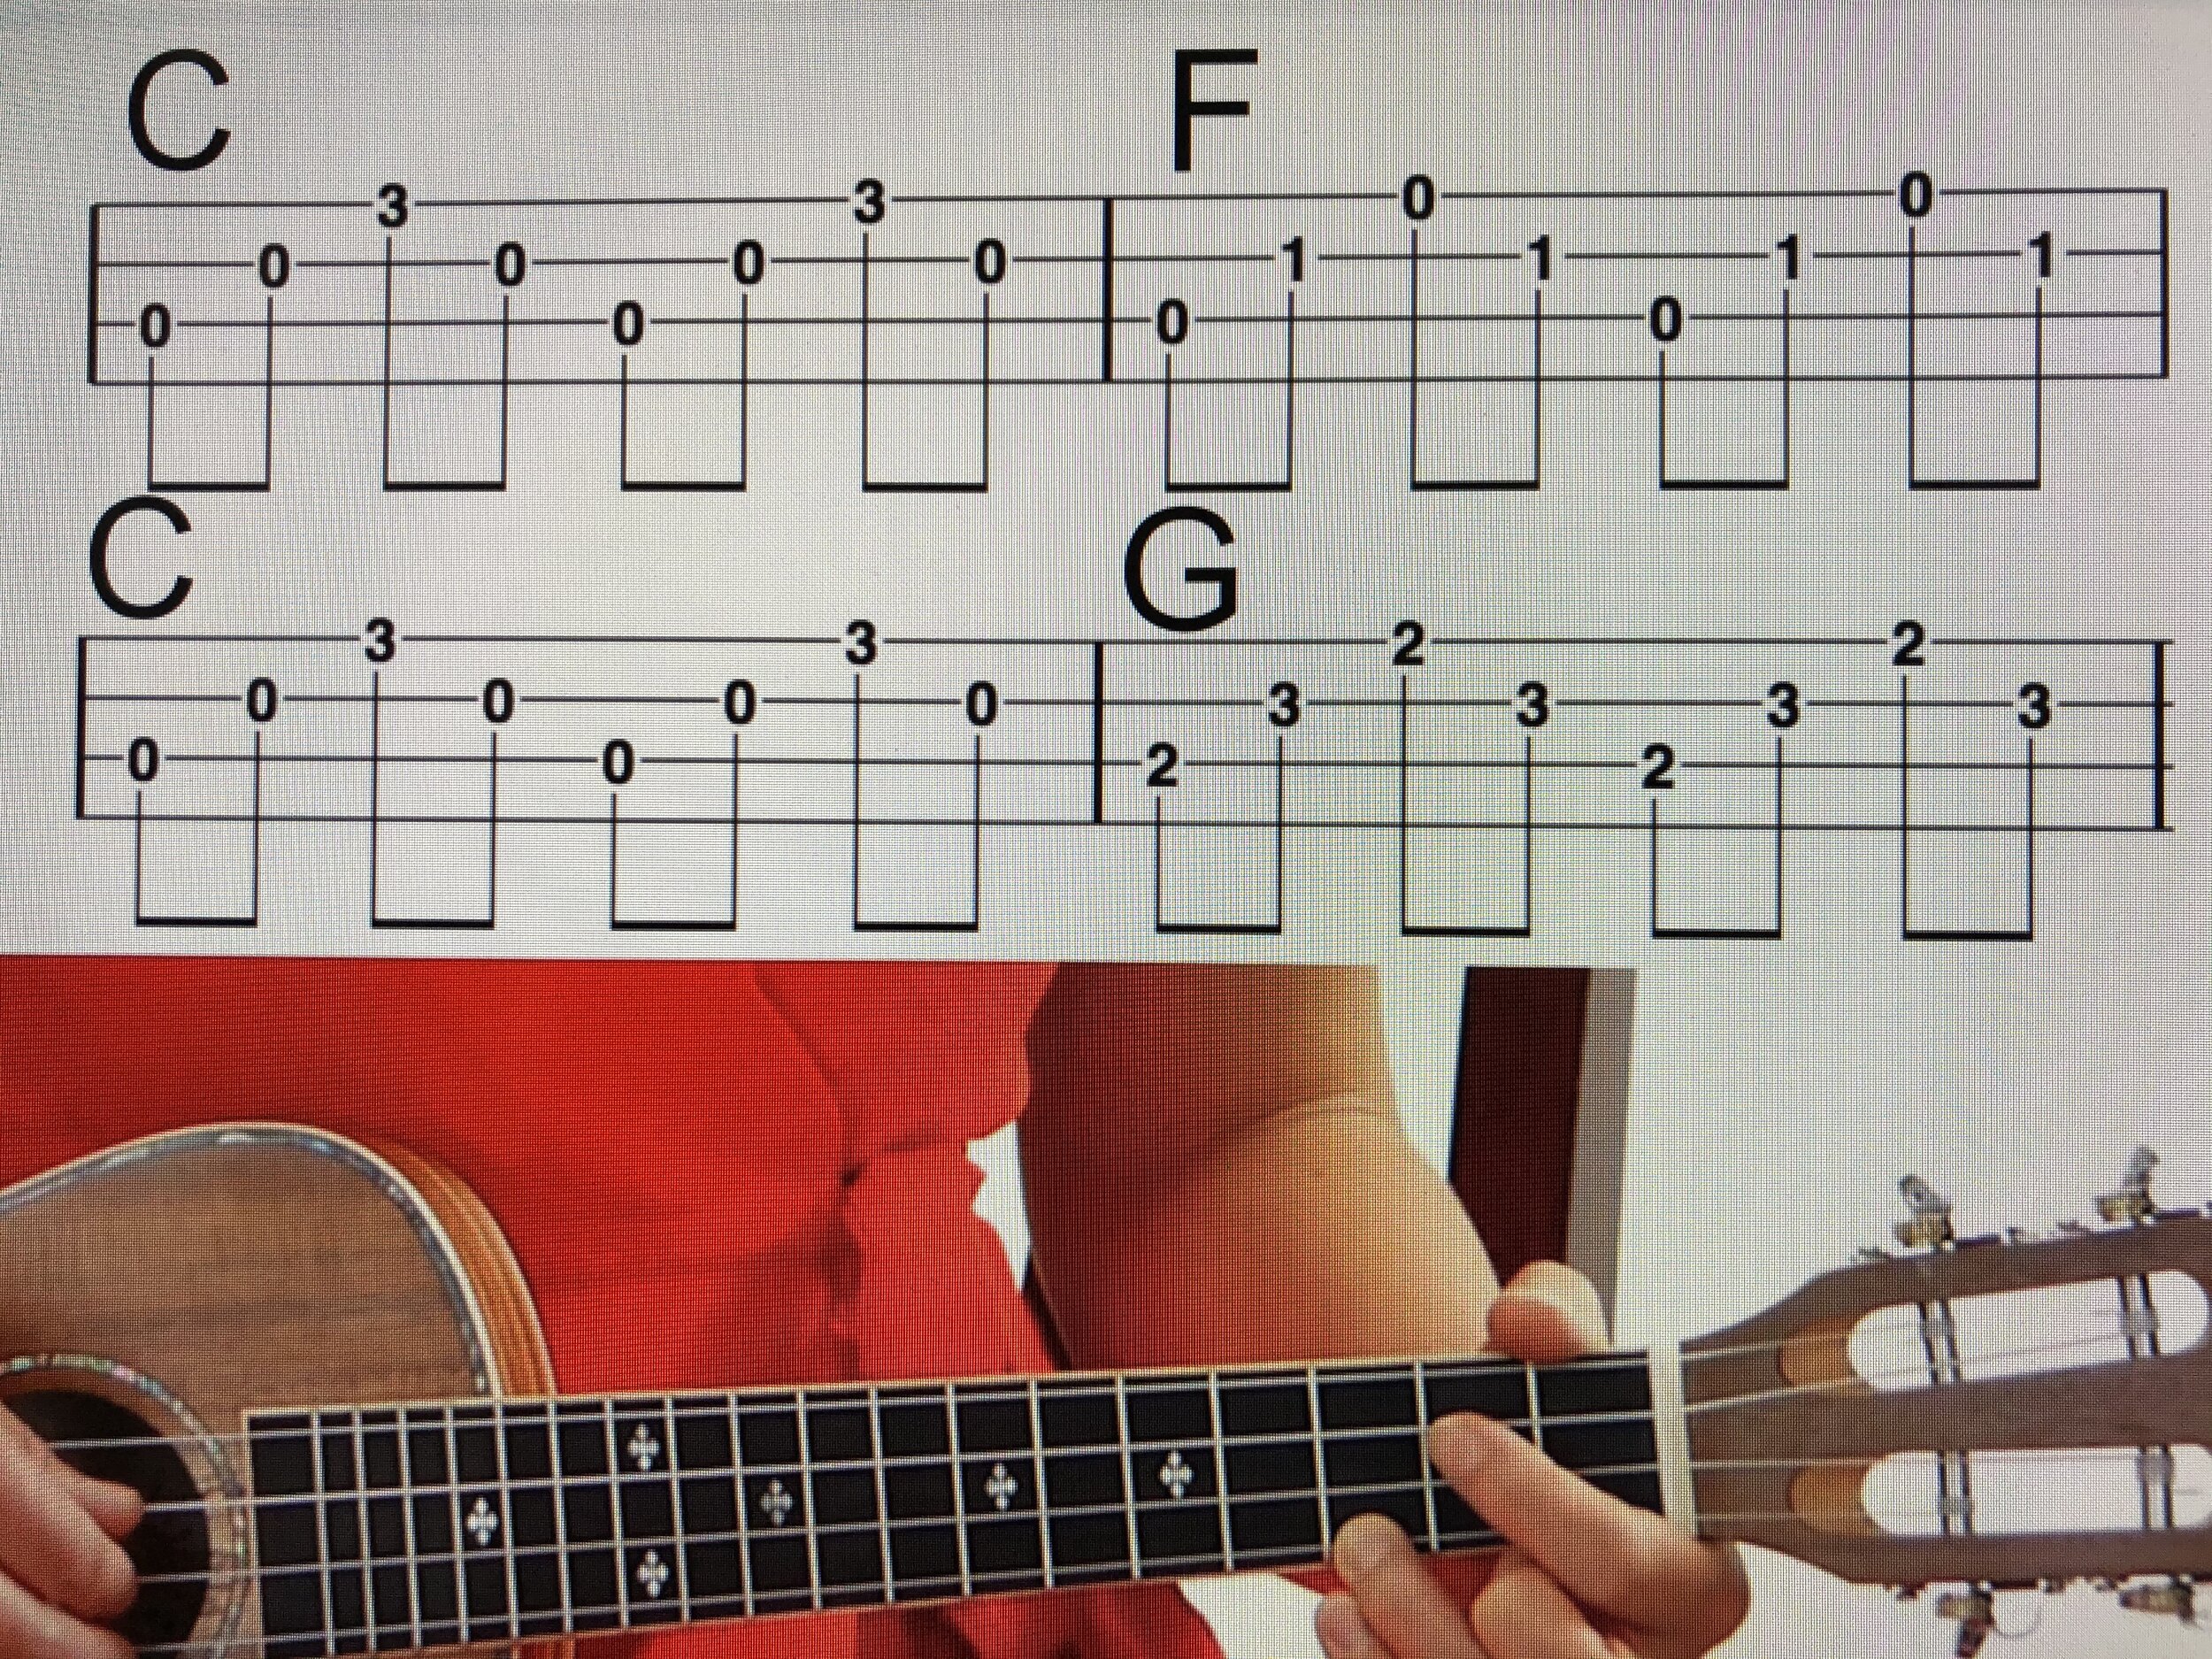 Learning ukulele finger picking.  Now's the time!